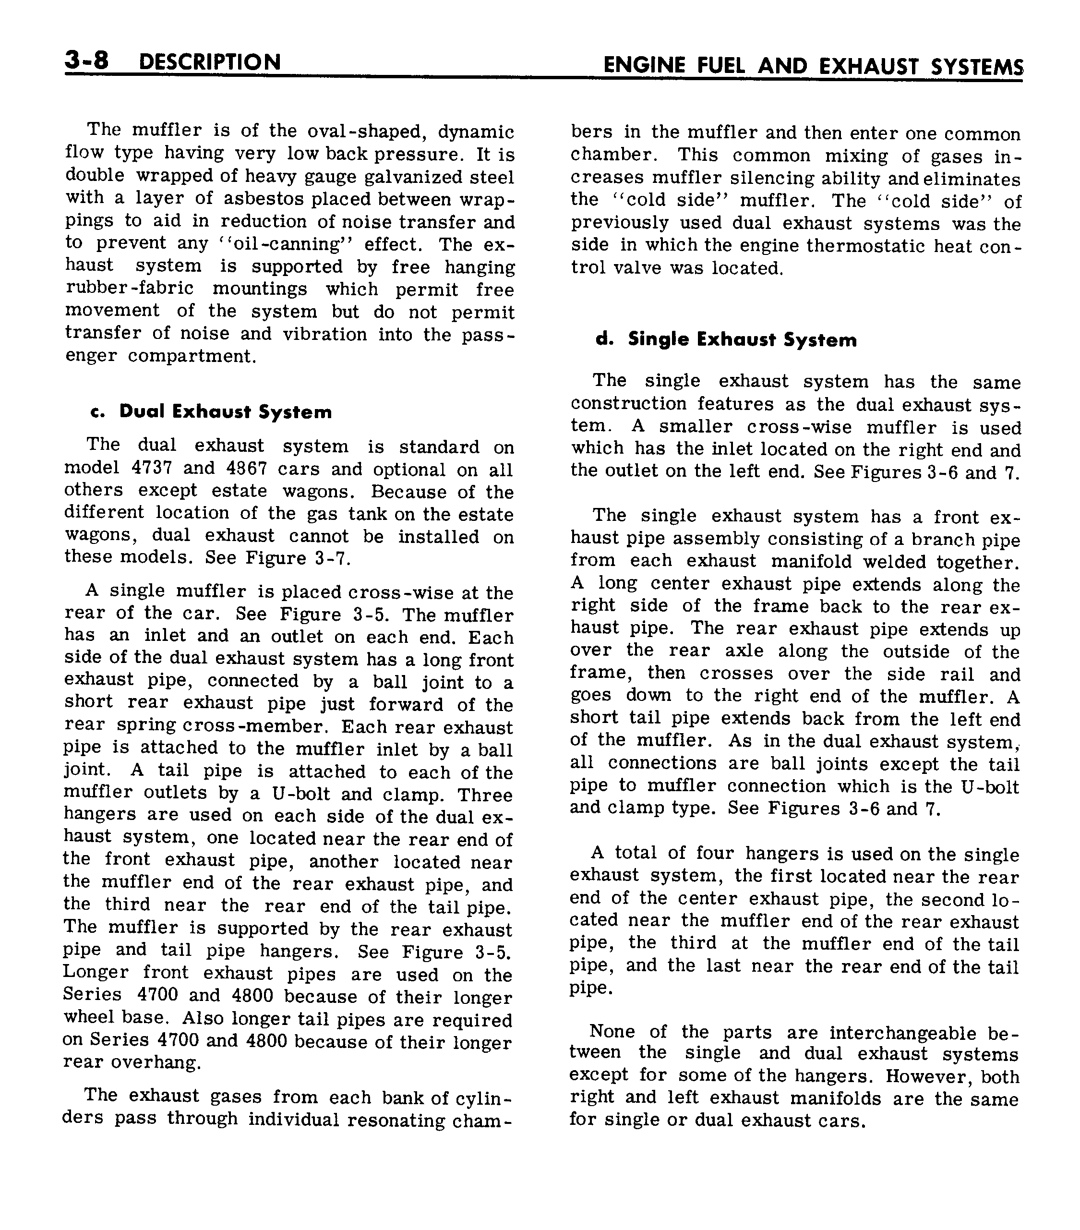 n_04 1961 Buick Shop Manual - Engine Fuel & Exhaust-008-008.jpg